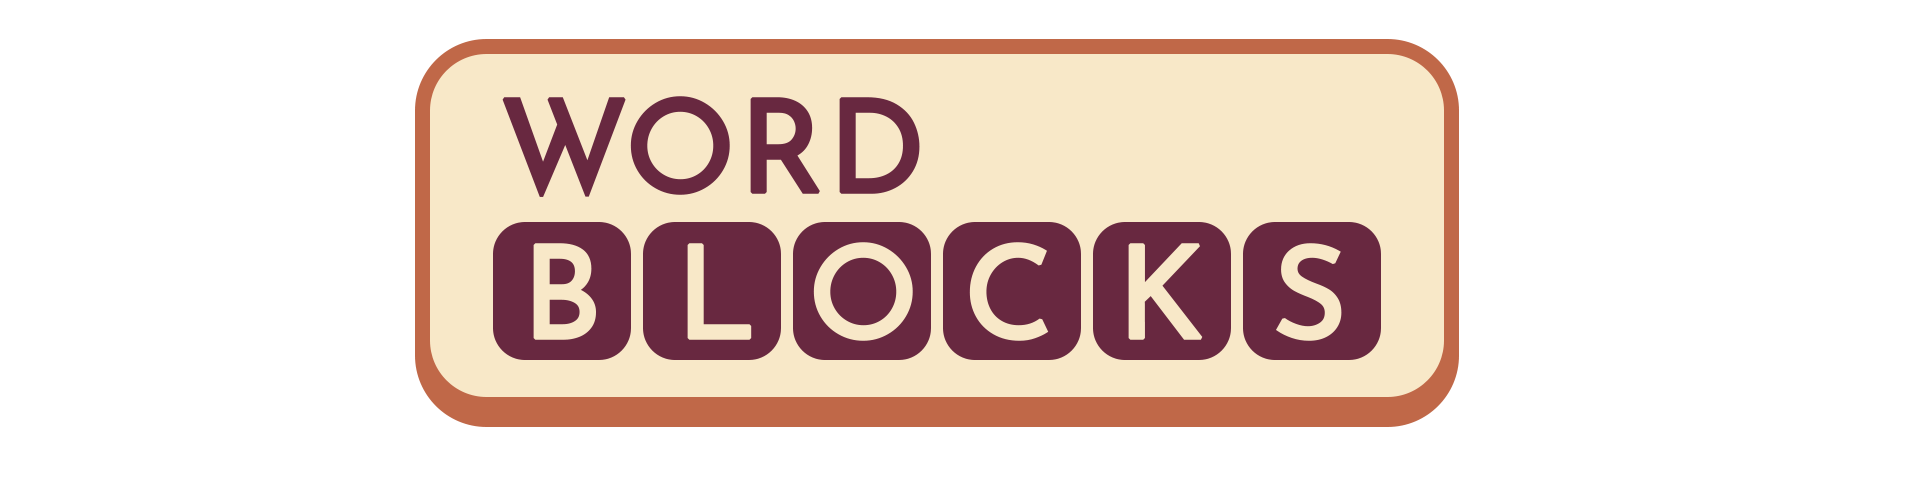 WORD BLOCKS